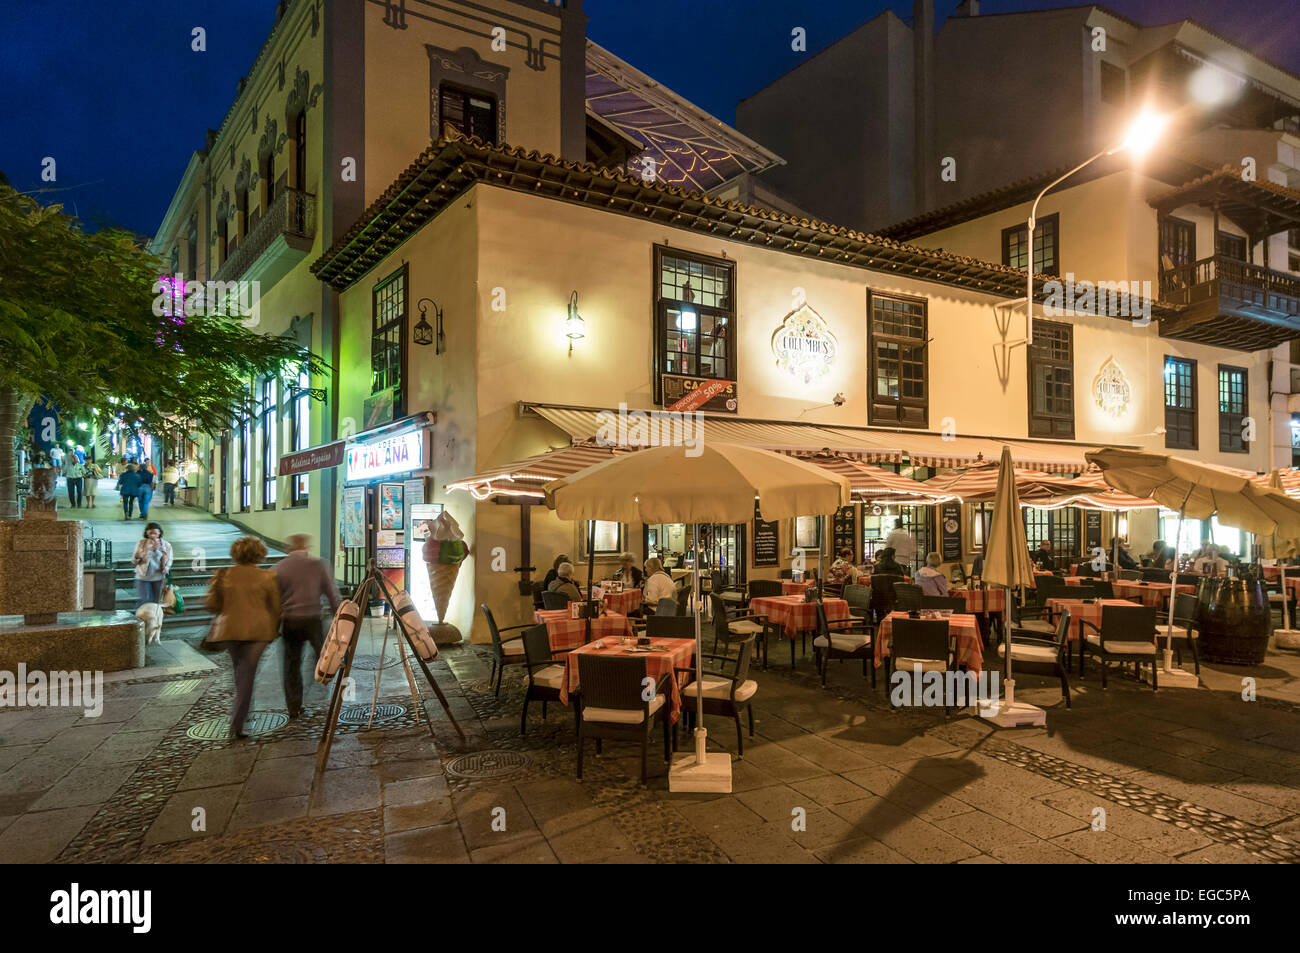 Puerto de la Cruz, Cafe Columbus, ristorante, persone, Isole Canarie,  Spagna Foto stock - Alamy